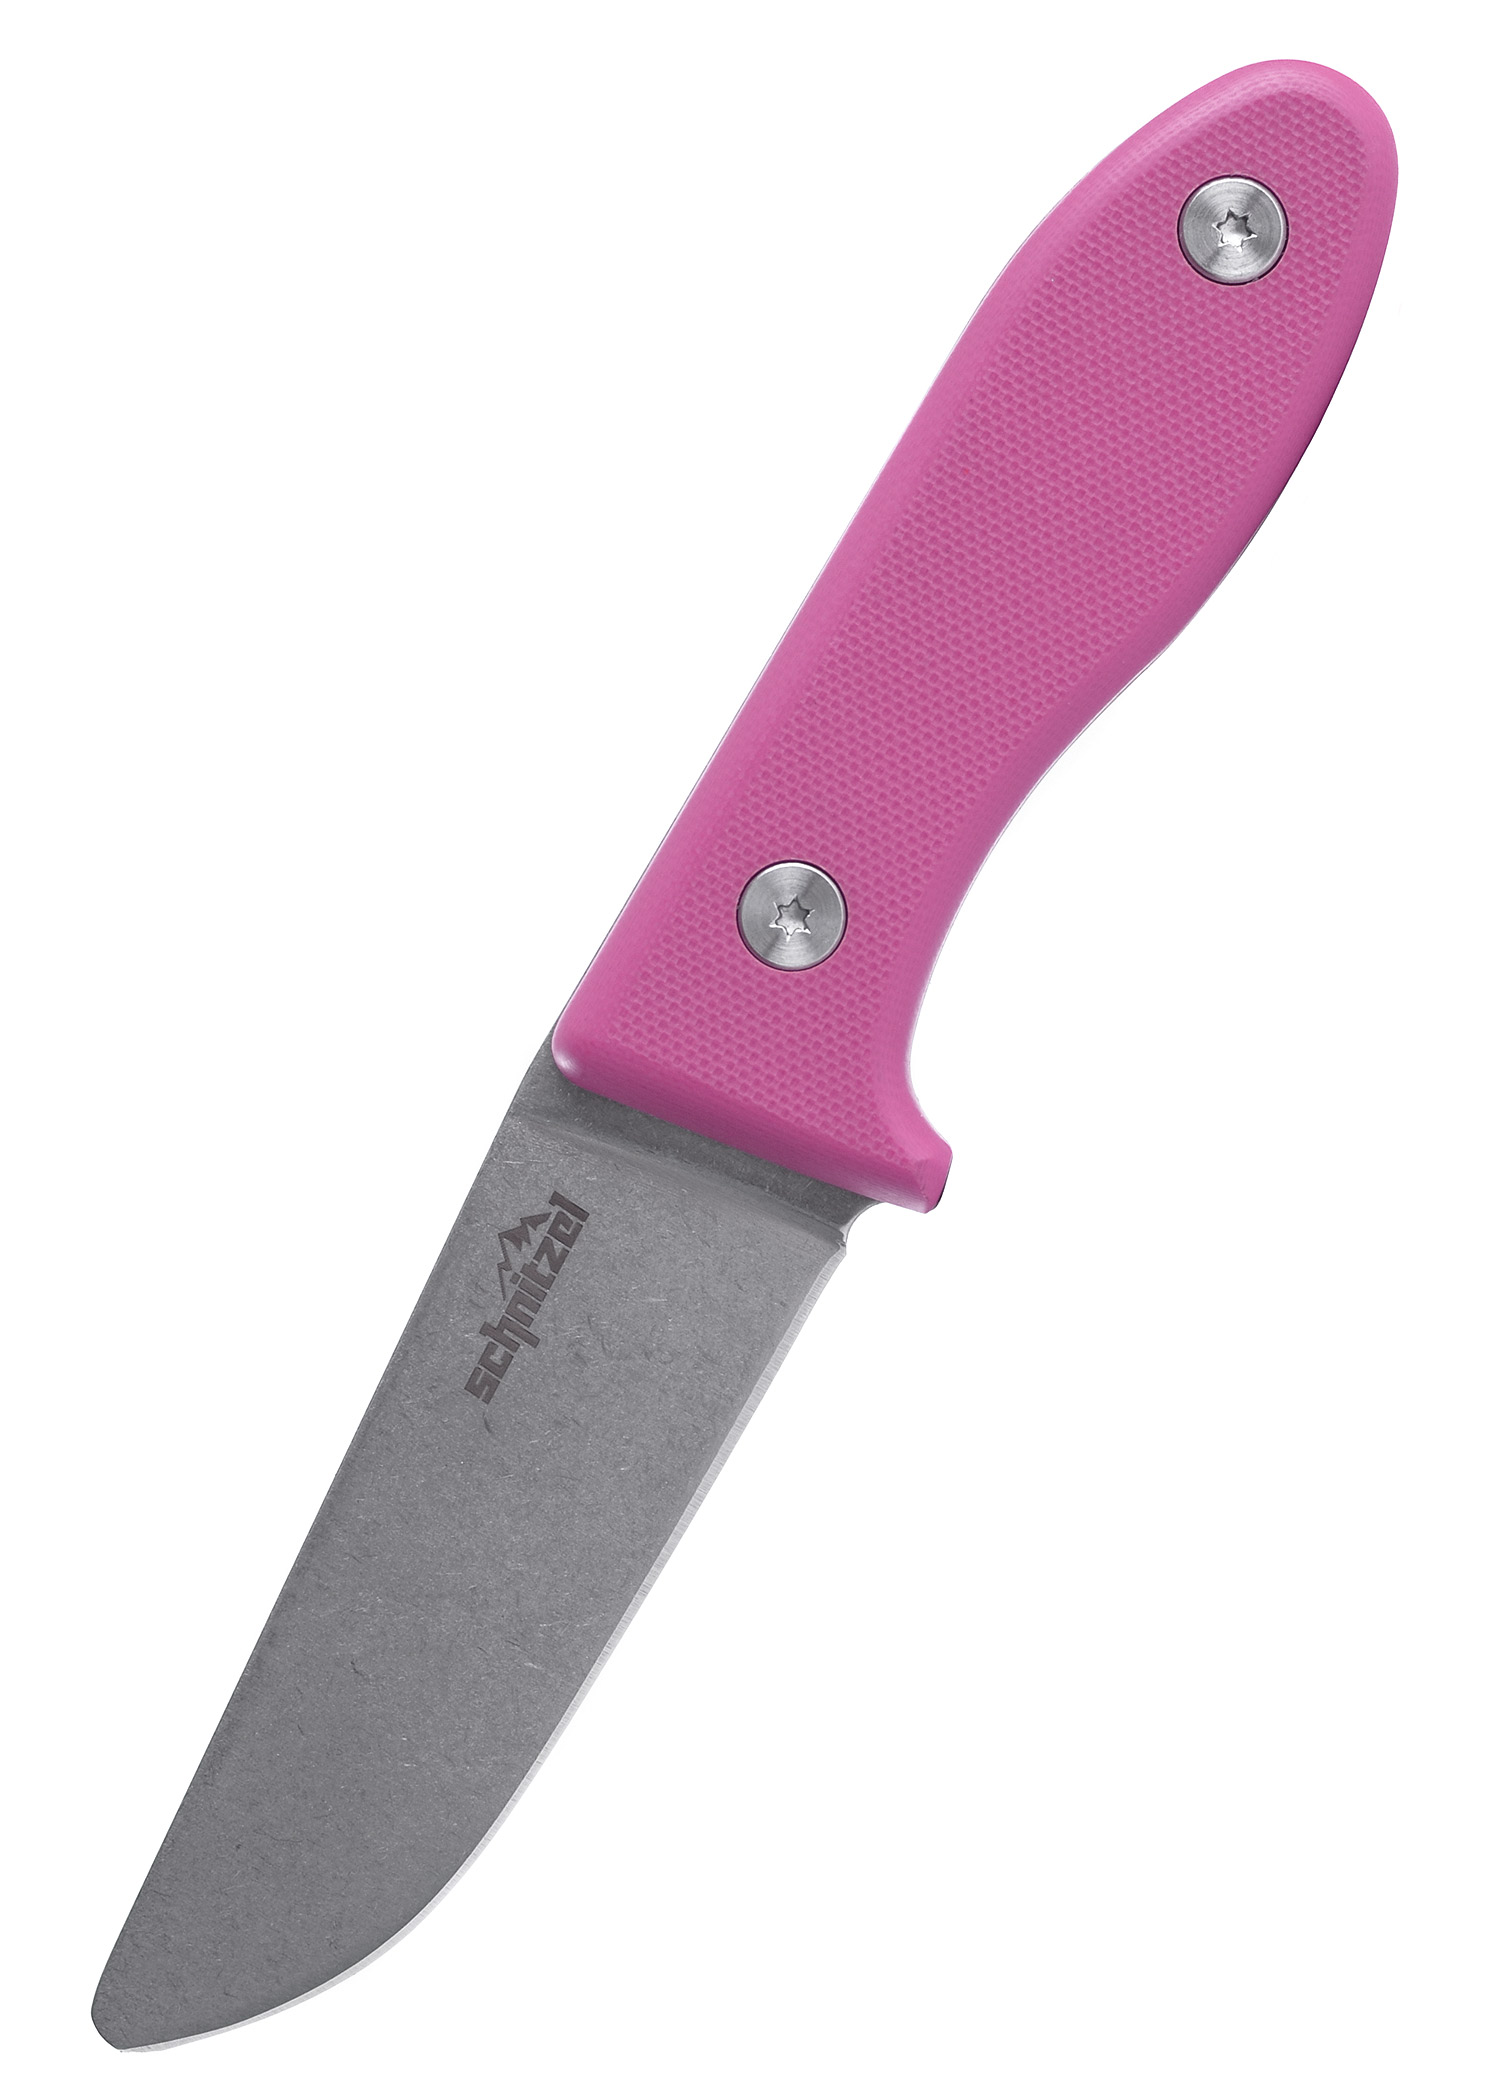 Schnitzel UNU child carving knife pink